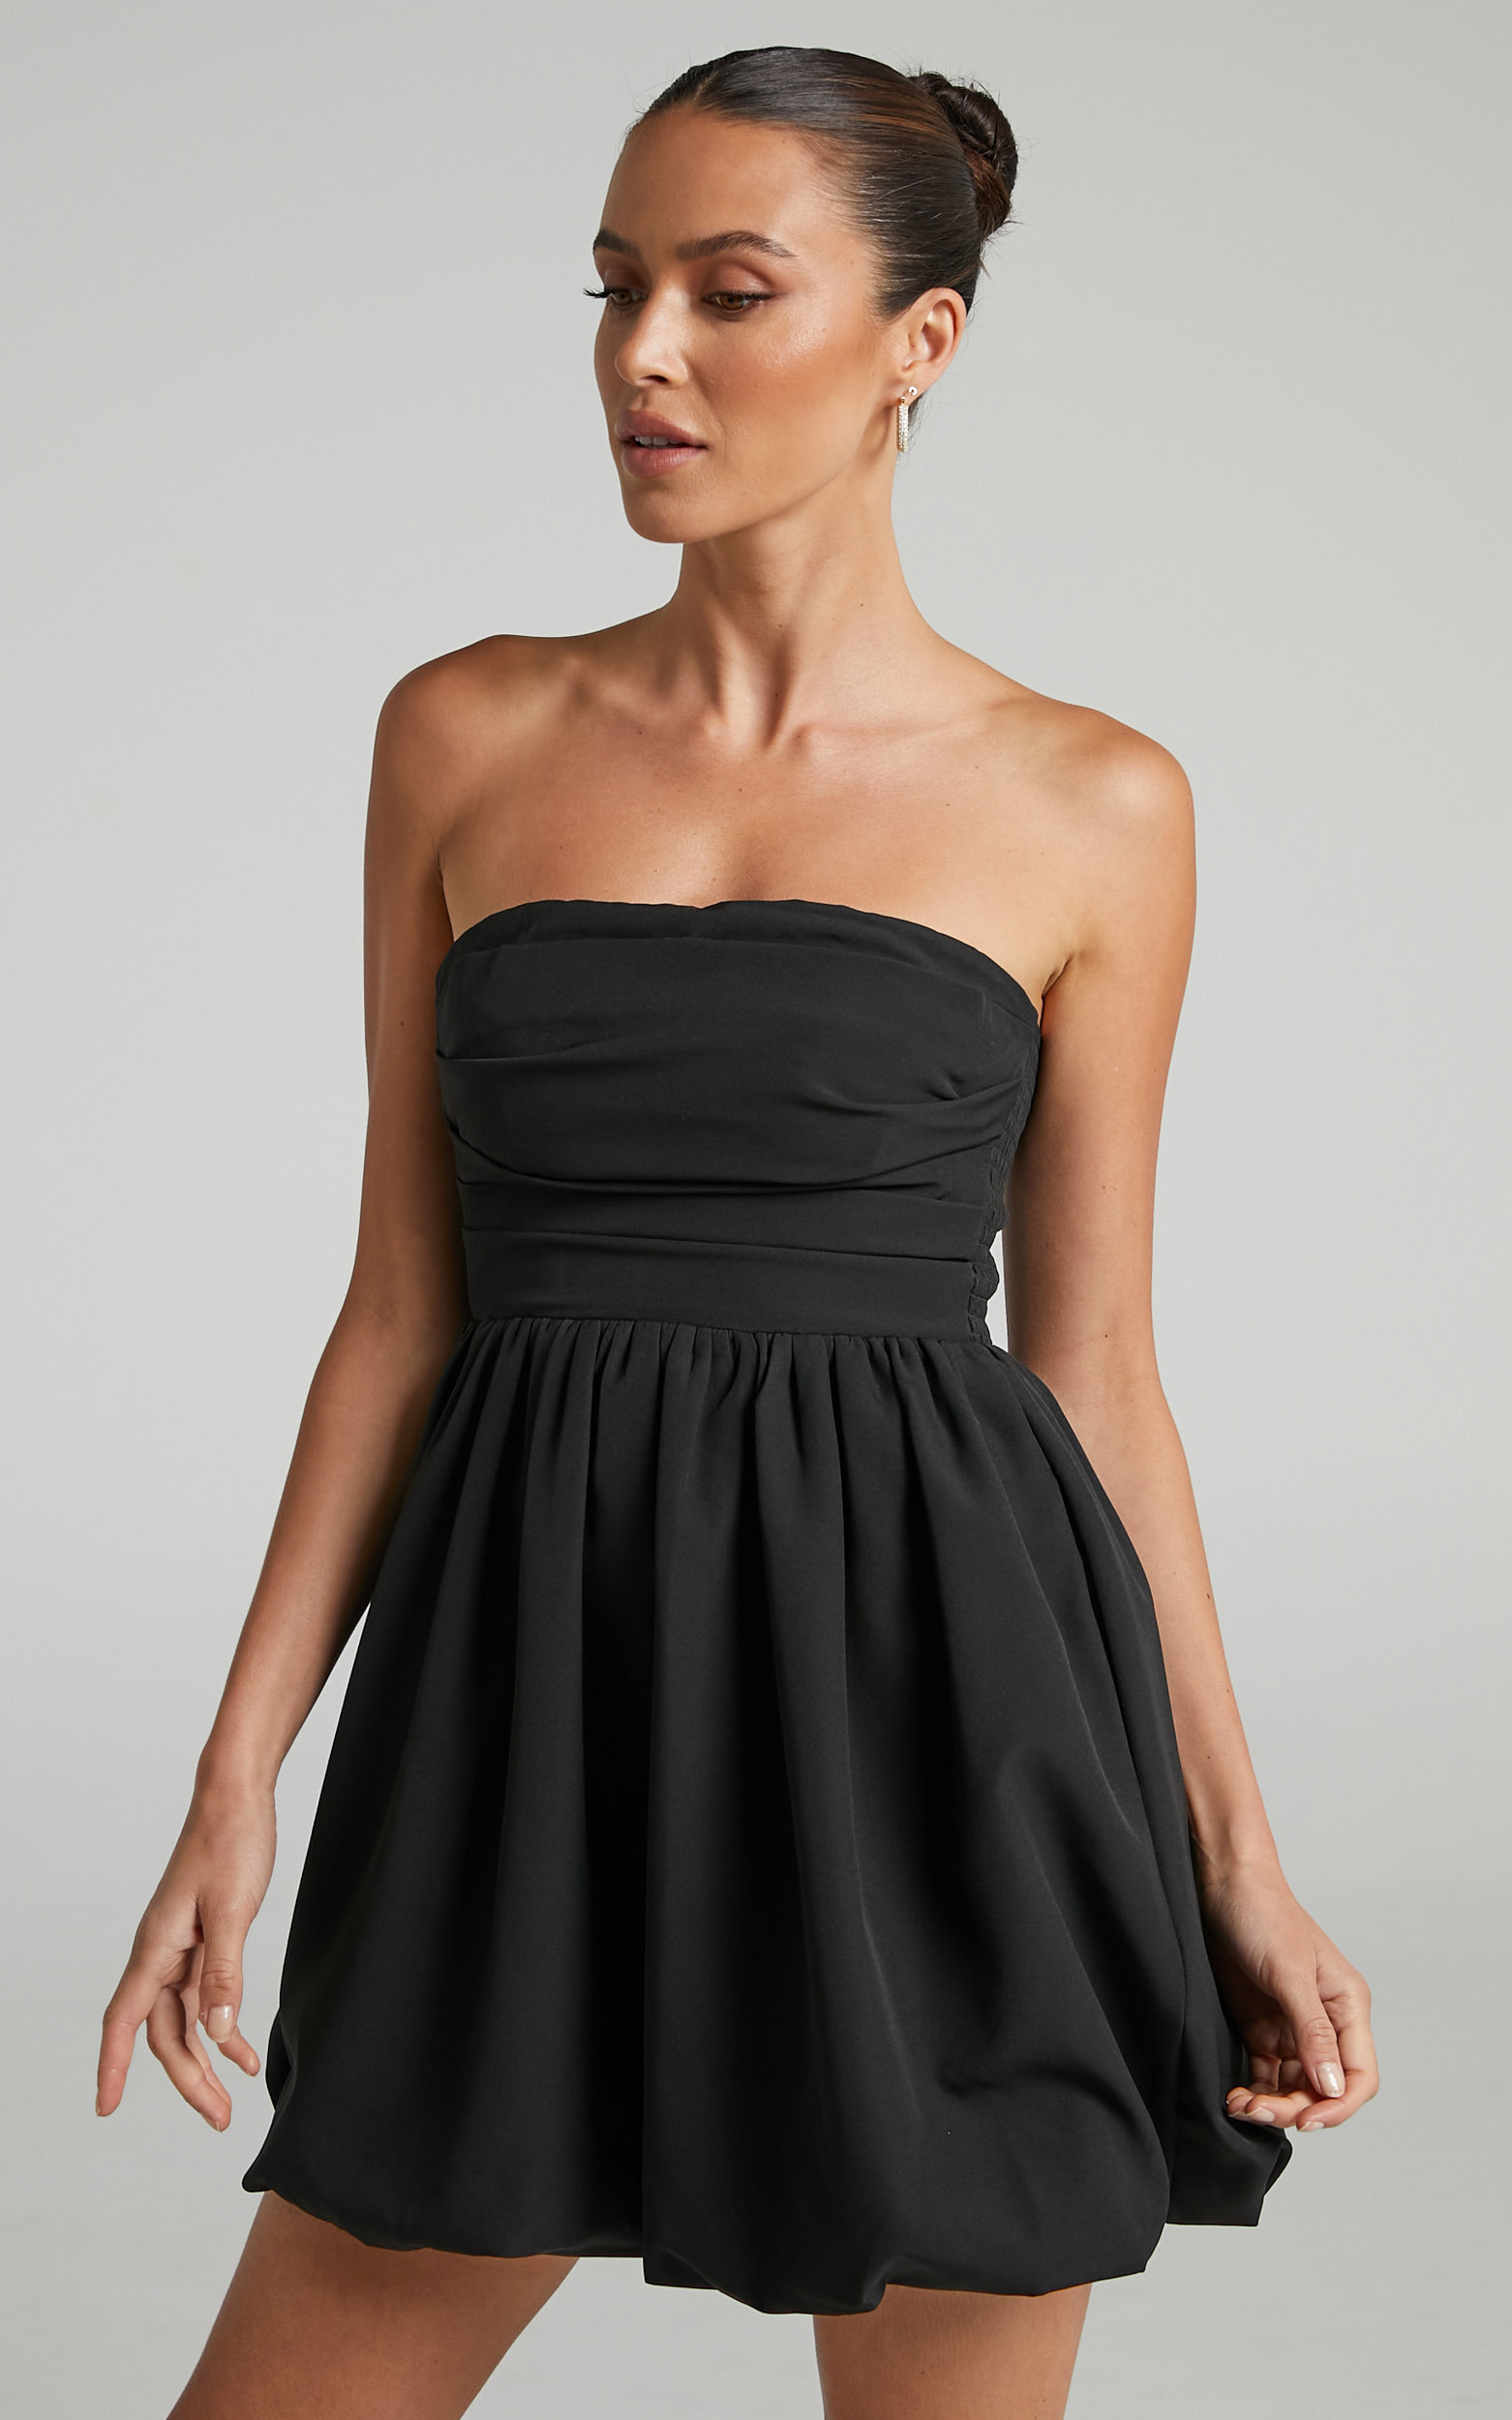 Shaima Strapless Mini Dress in Black - 08, BLK1, hi-res image number null